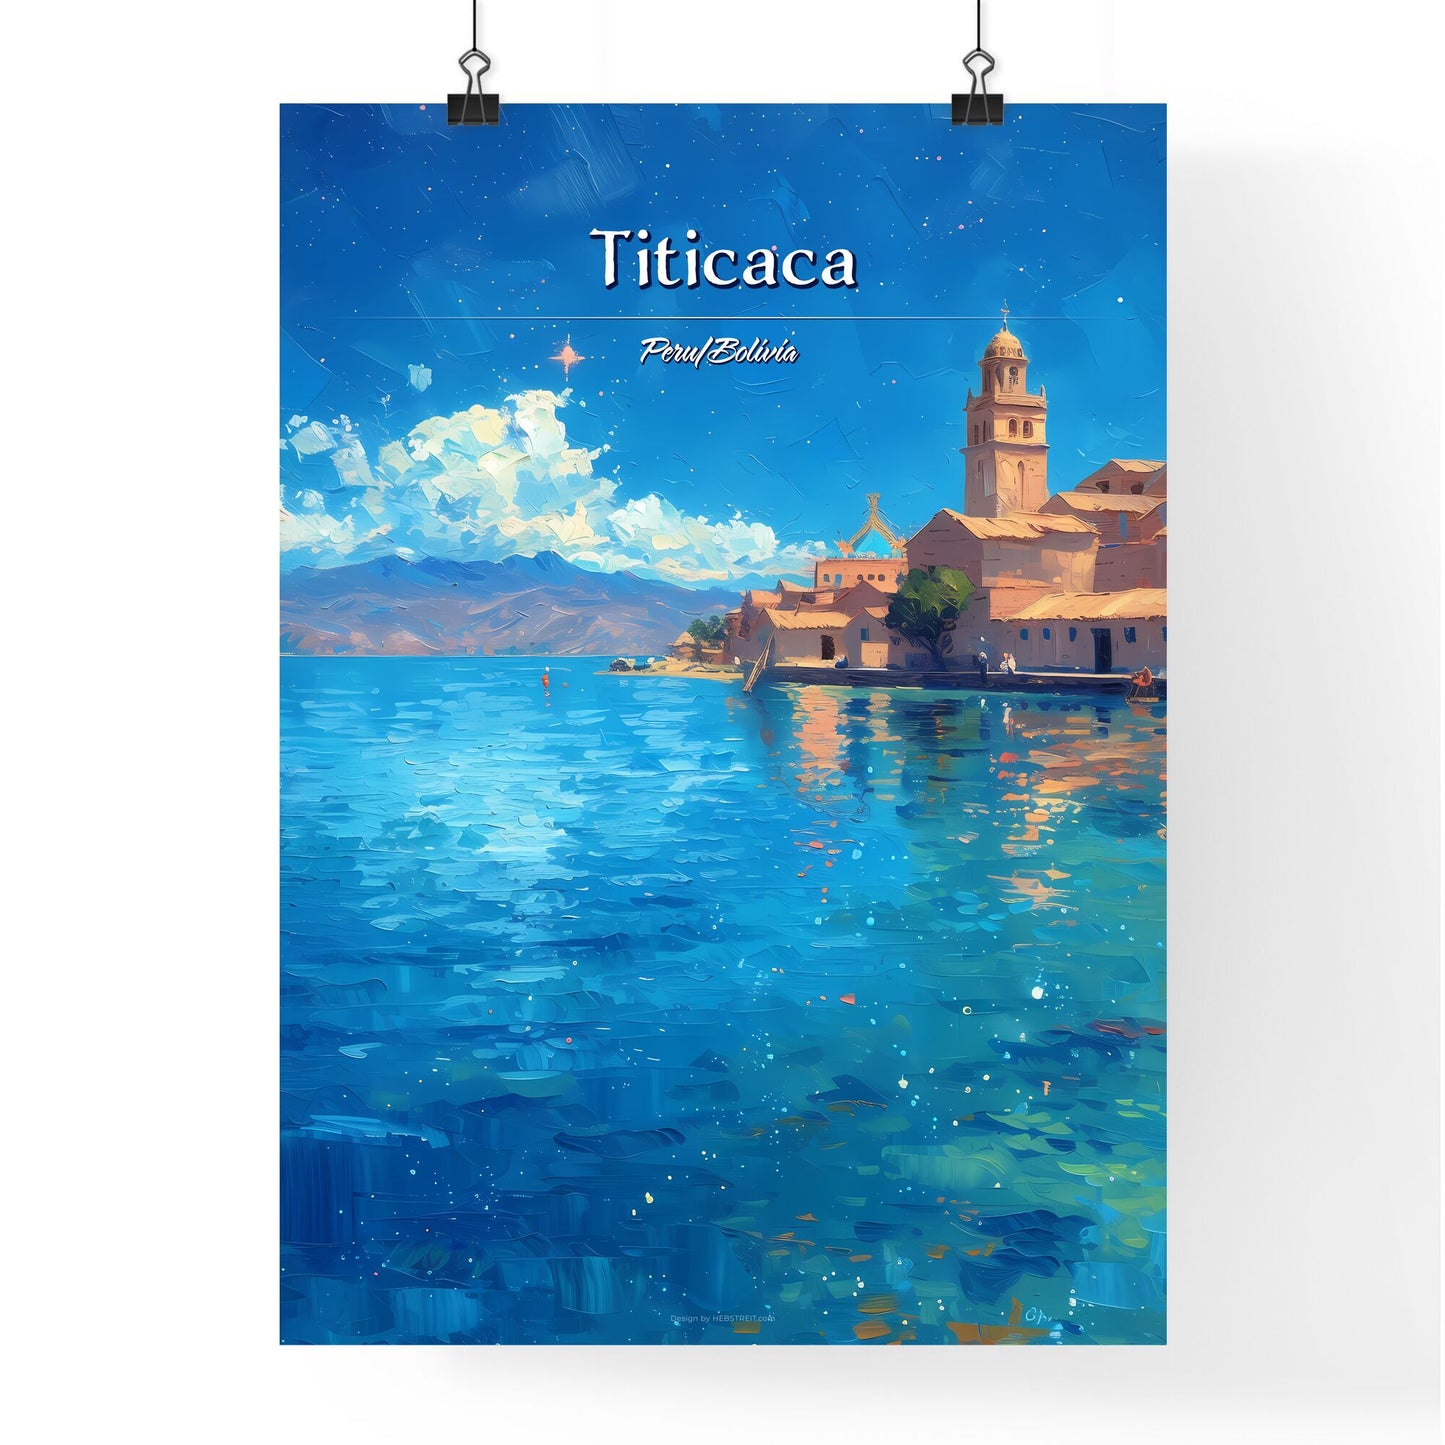 Titicaca, Peru/Bolivia - Art print of a city next to a body of water Default Title